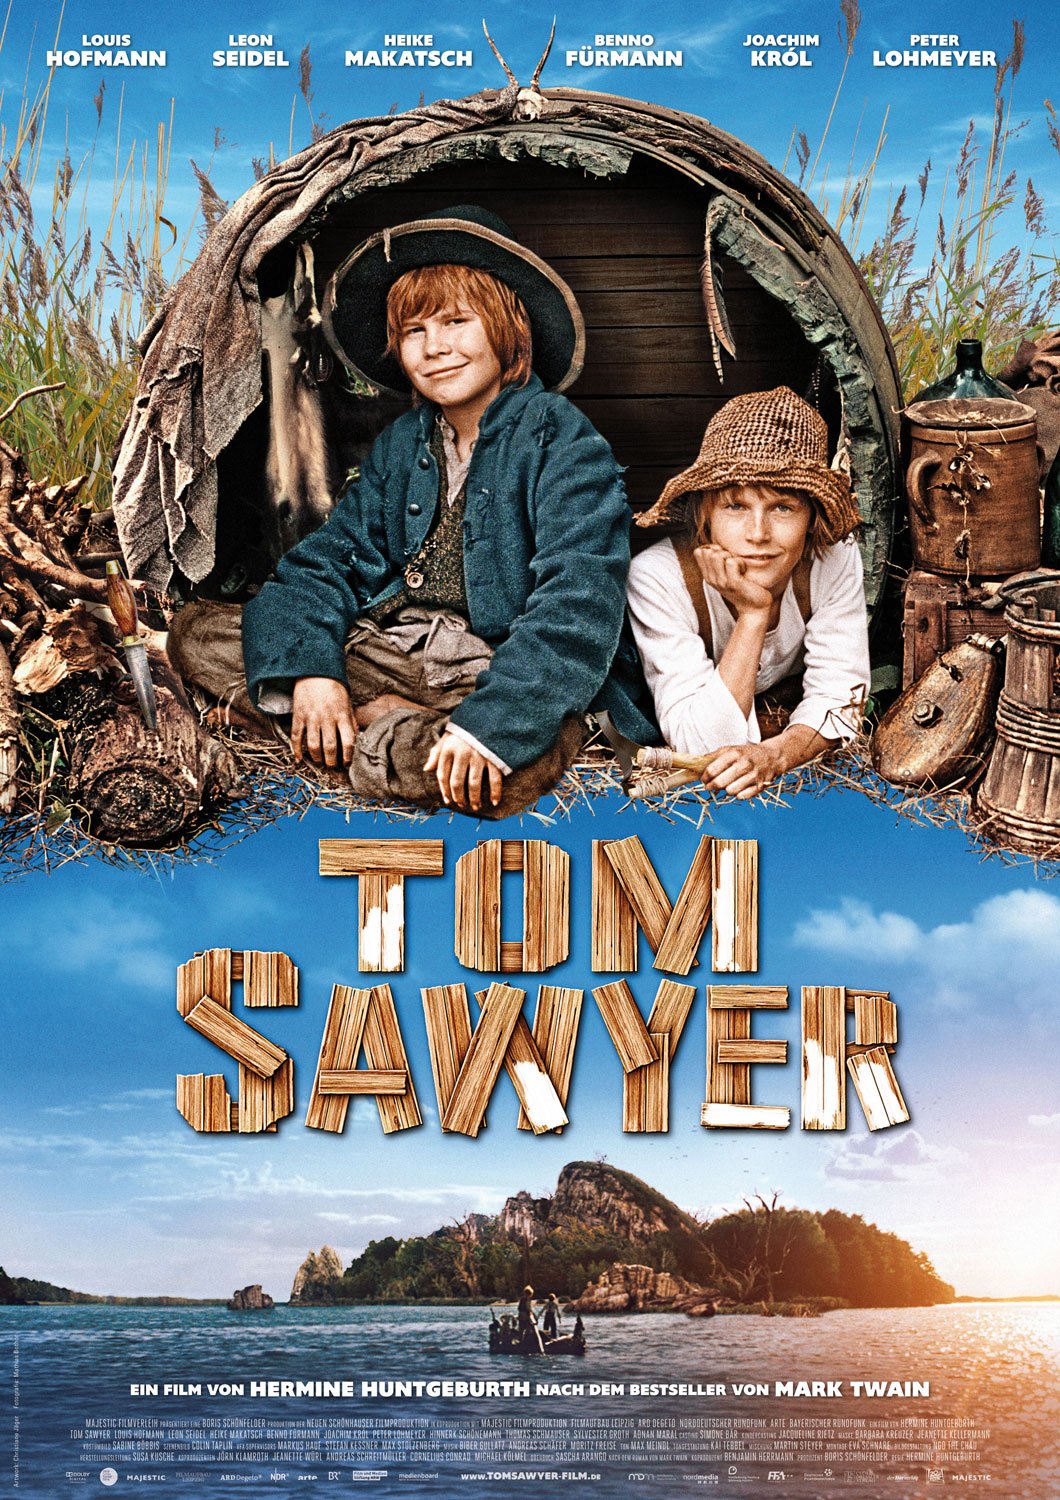 L'affiche originale du film Tom Sawyer en allemand